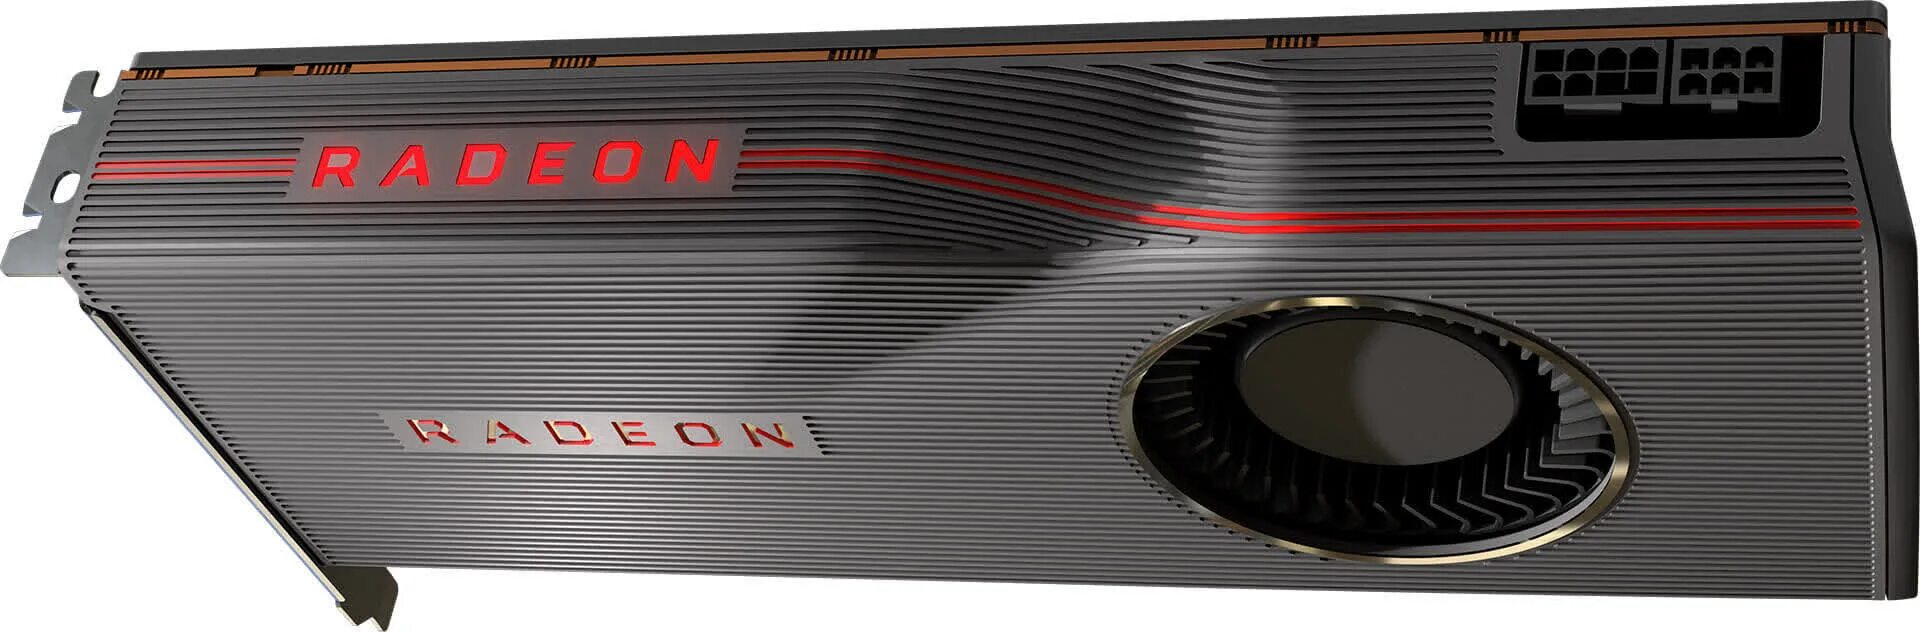 RX 5700 XT. AMD Radeon RX 5700 XT. RX 5700xt Nurma. 5700xt 6600